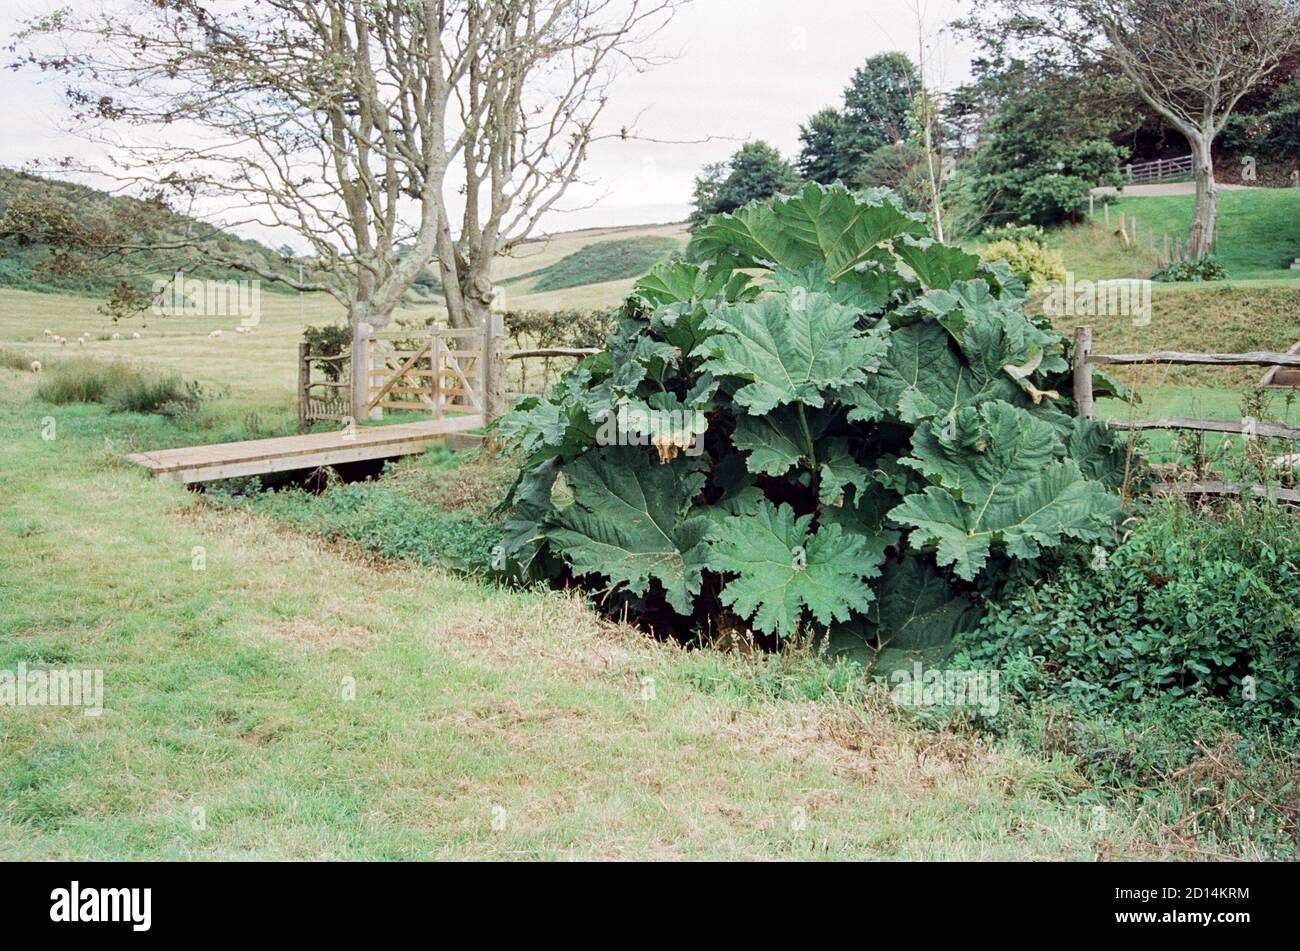 Giant Gunnera plant, Hope Cove, Kingsbridge, Devon, England, United Kingdom. Stock Photo